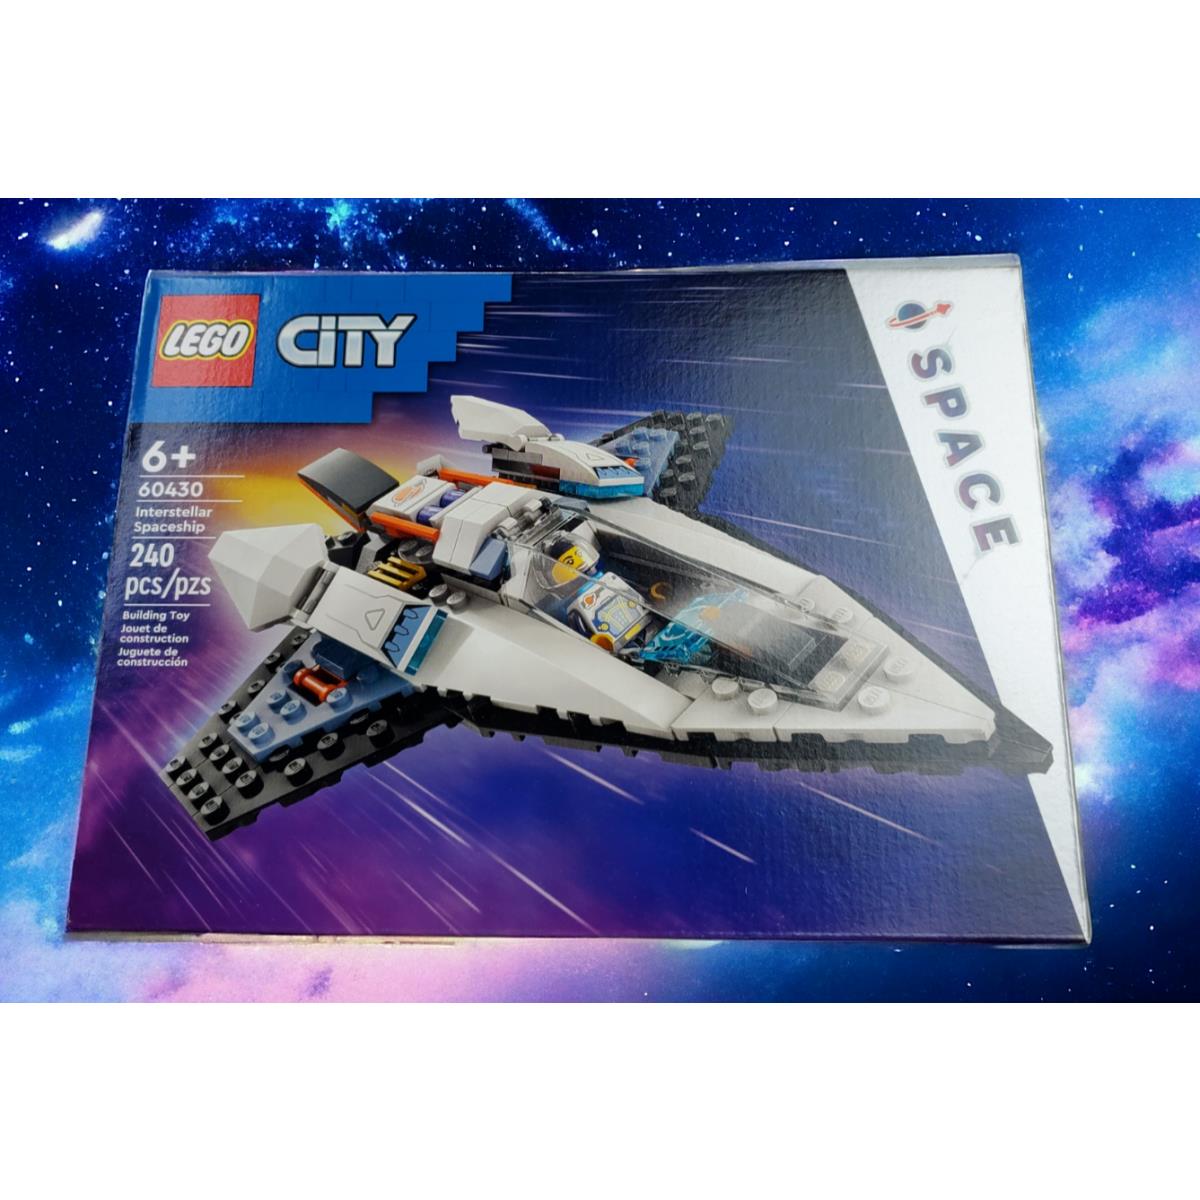 Lego Set 60430 City Space Interstellar Spaceship Building Set Female Astronaut